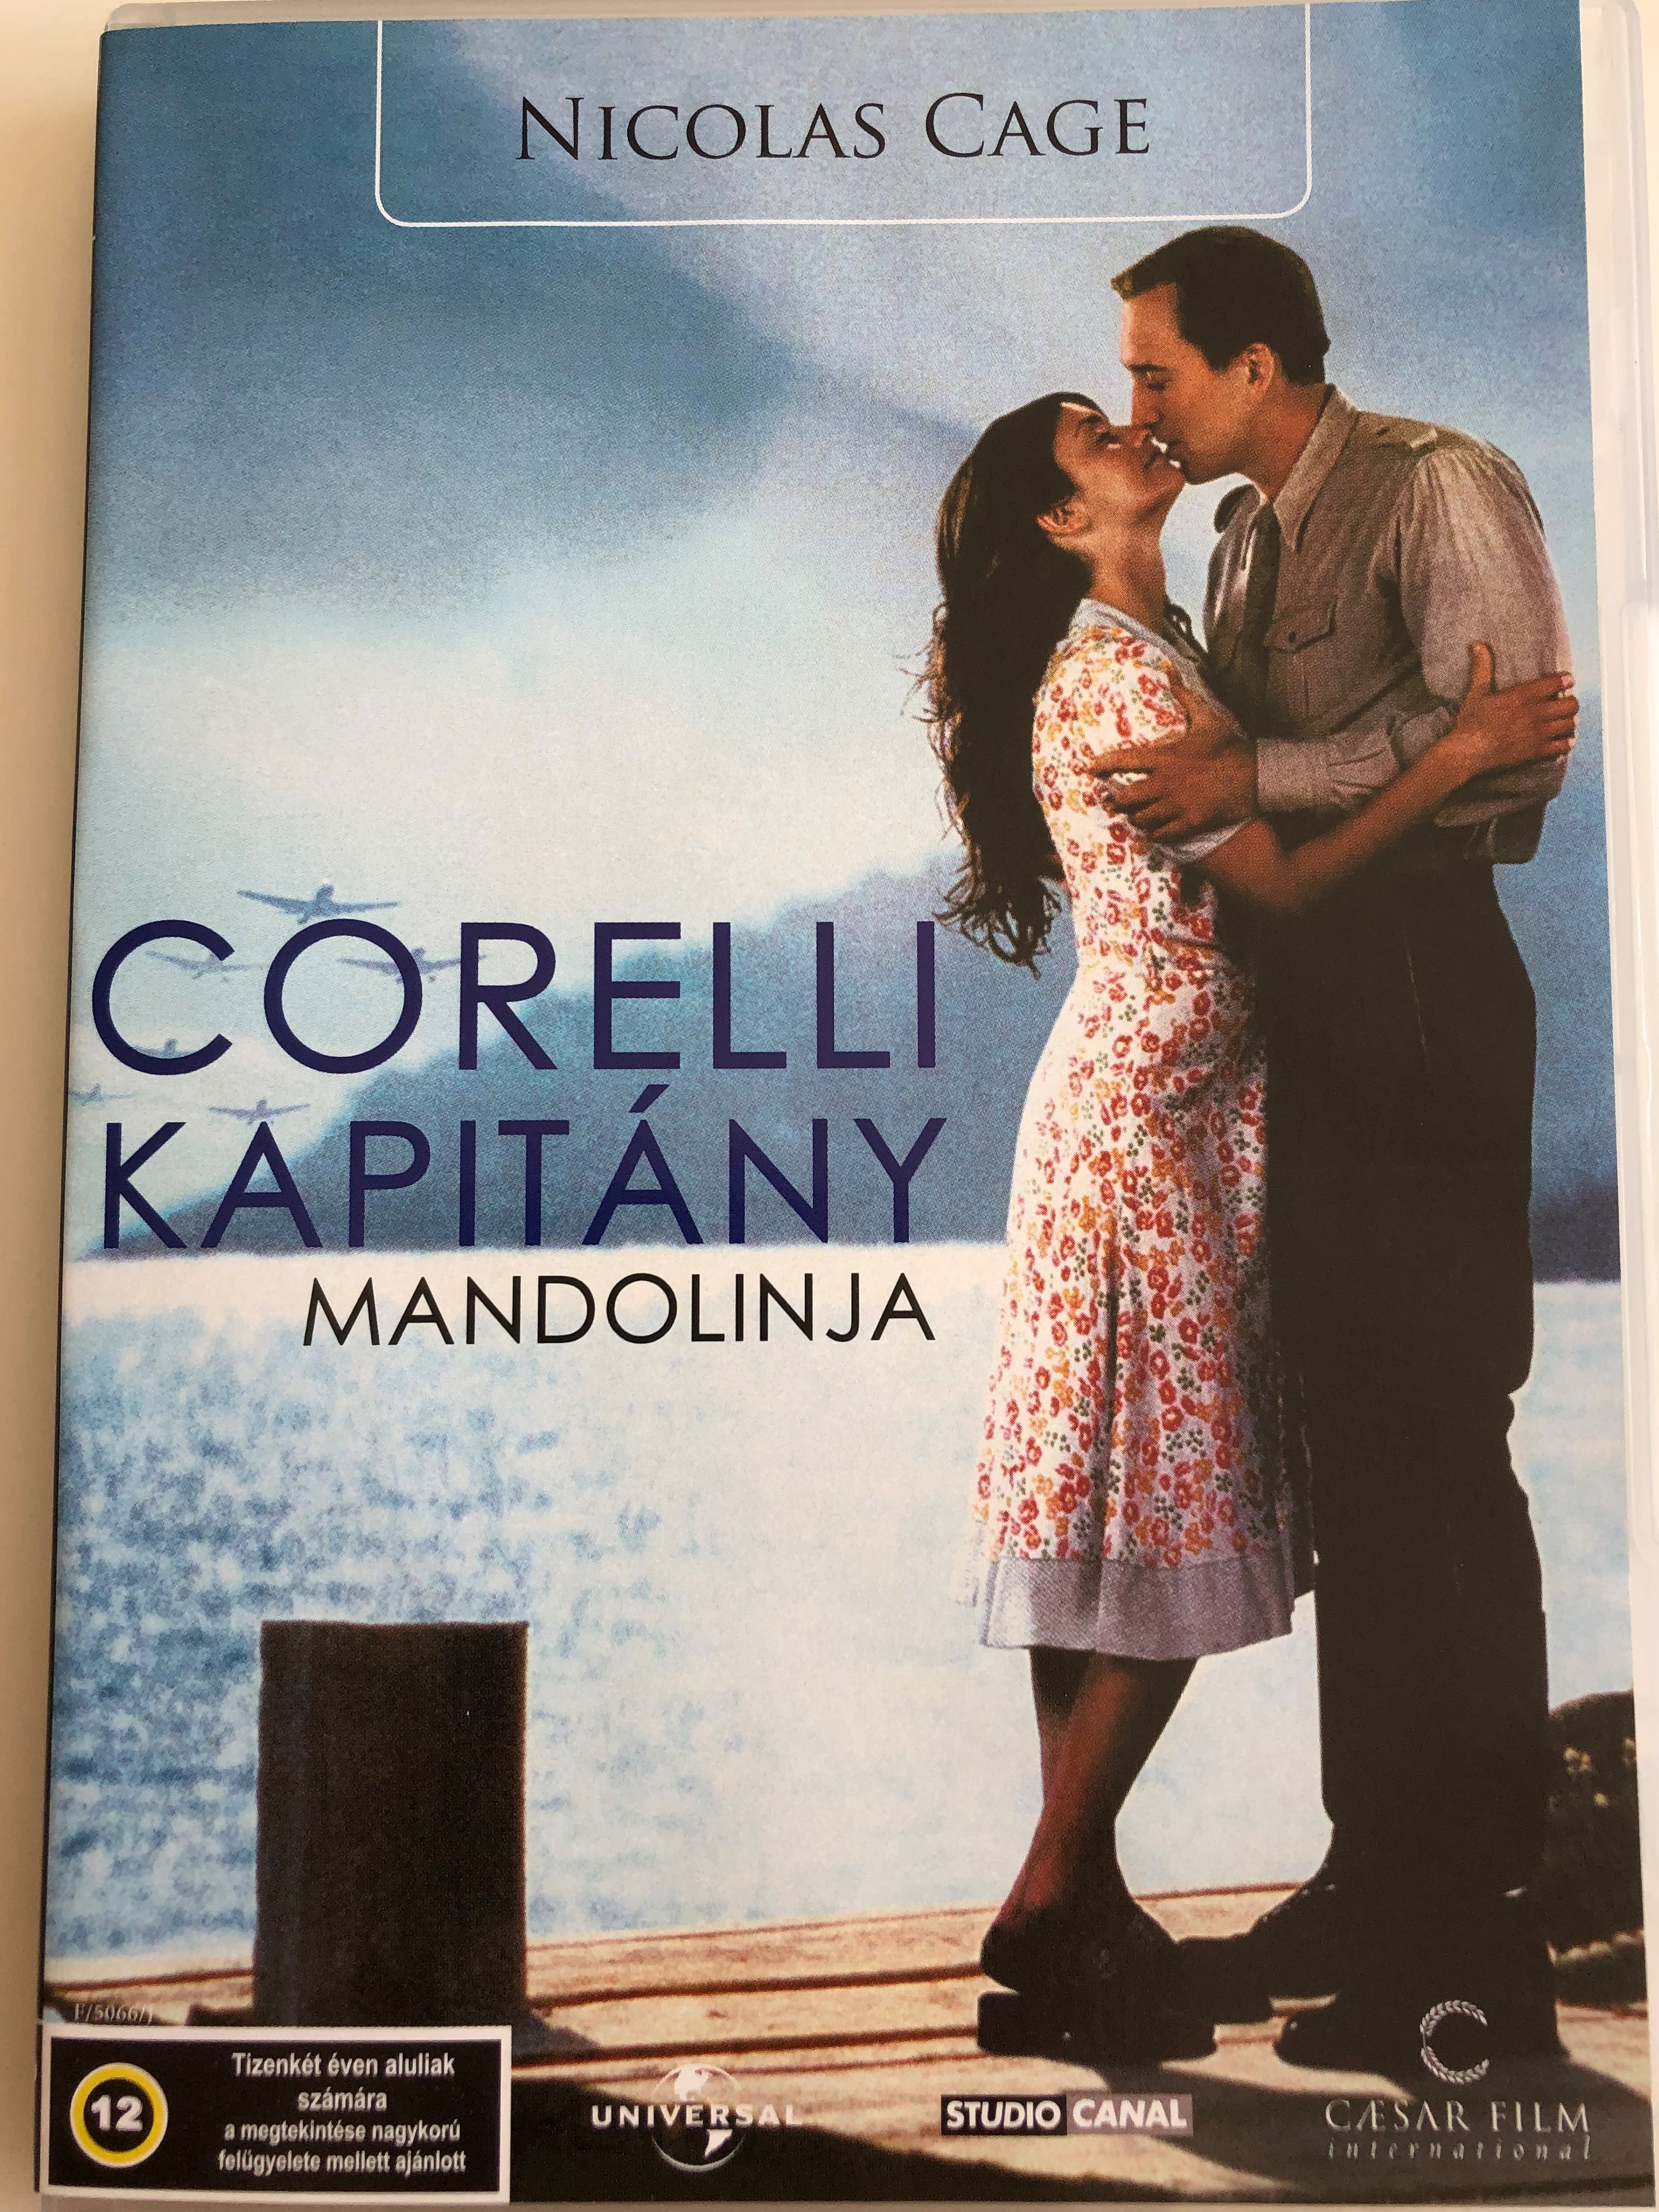 Captain Corelli's Mandolin DVD 2001 Corelli Kapitány Mandolinja / Directed  by John Madden / Starring: Penelope Cruz, Nicolas Cage - bibleinmylanguage